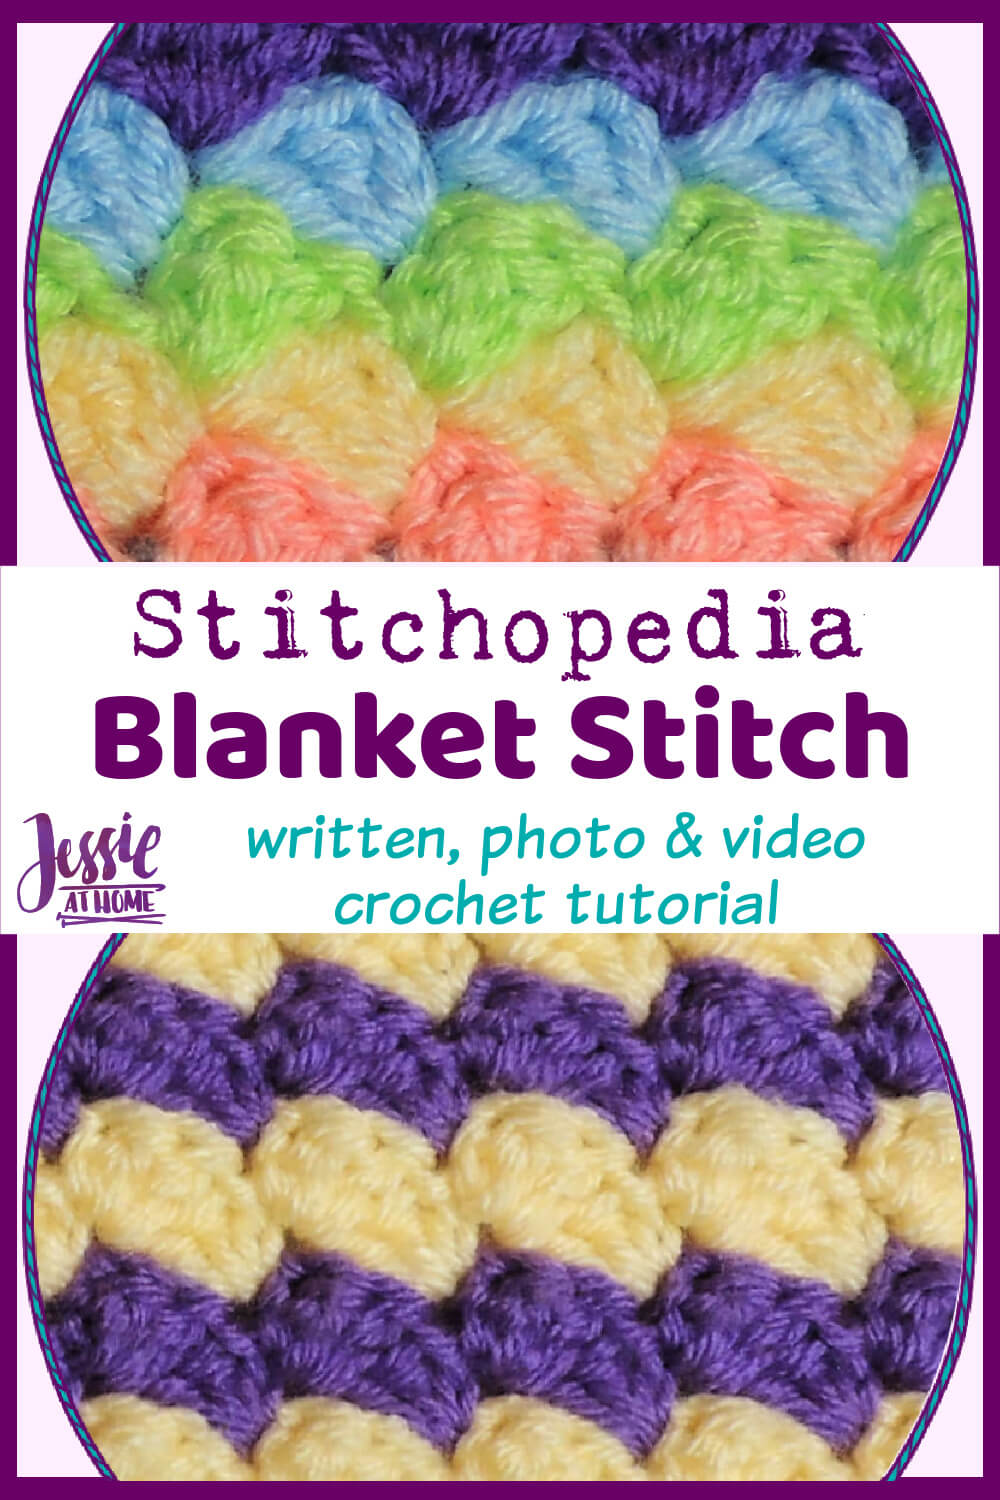 Blanket Stitch - written, photo, and video crochet tutorial